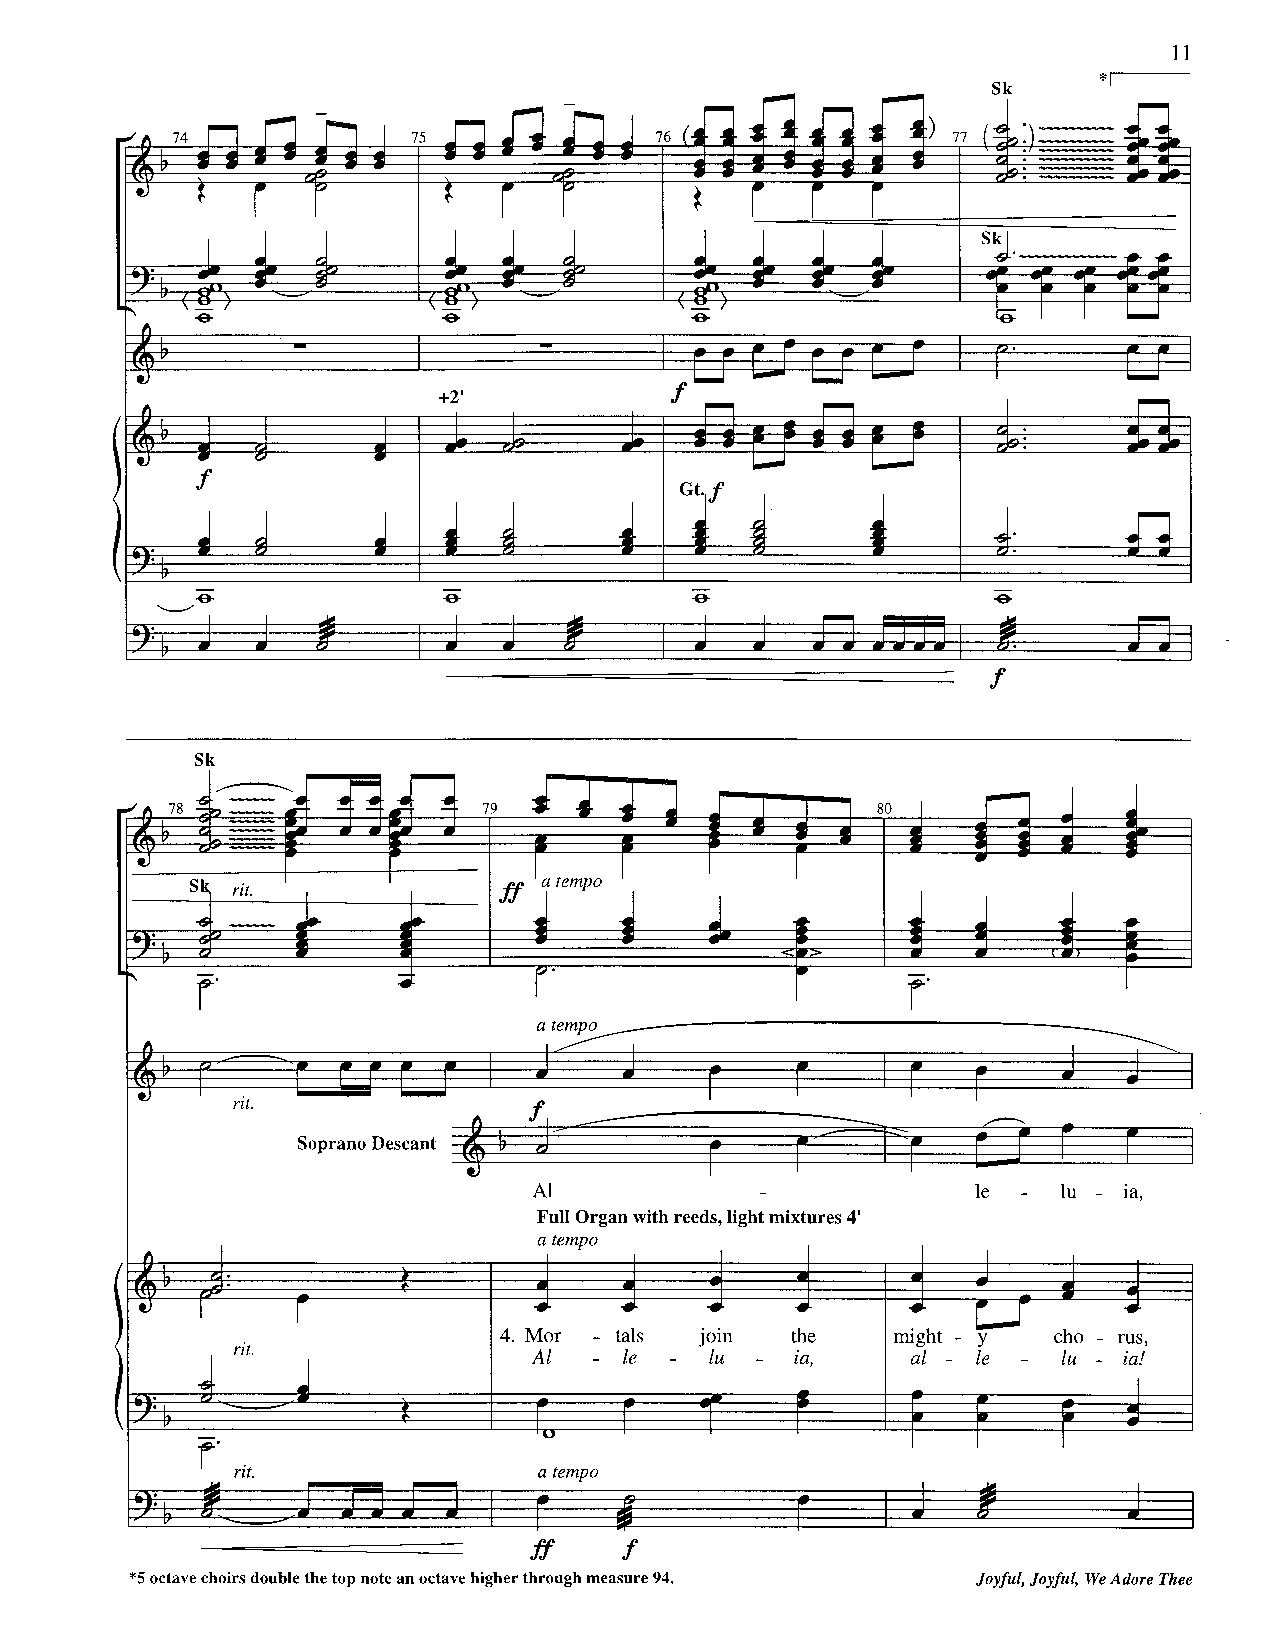 Joyful Joyful We Adore Thee Organ Score